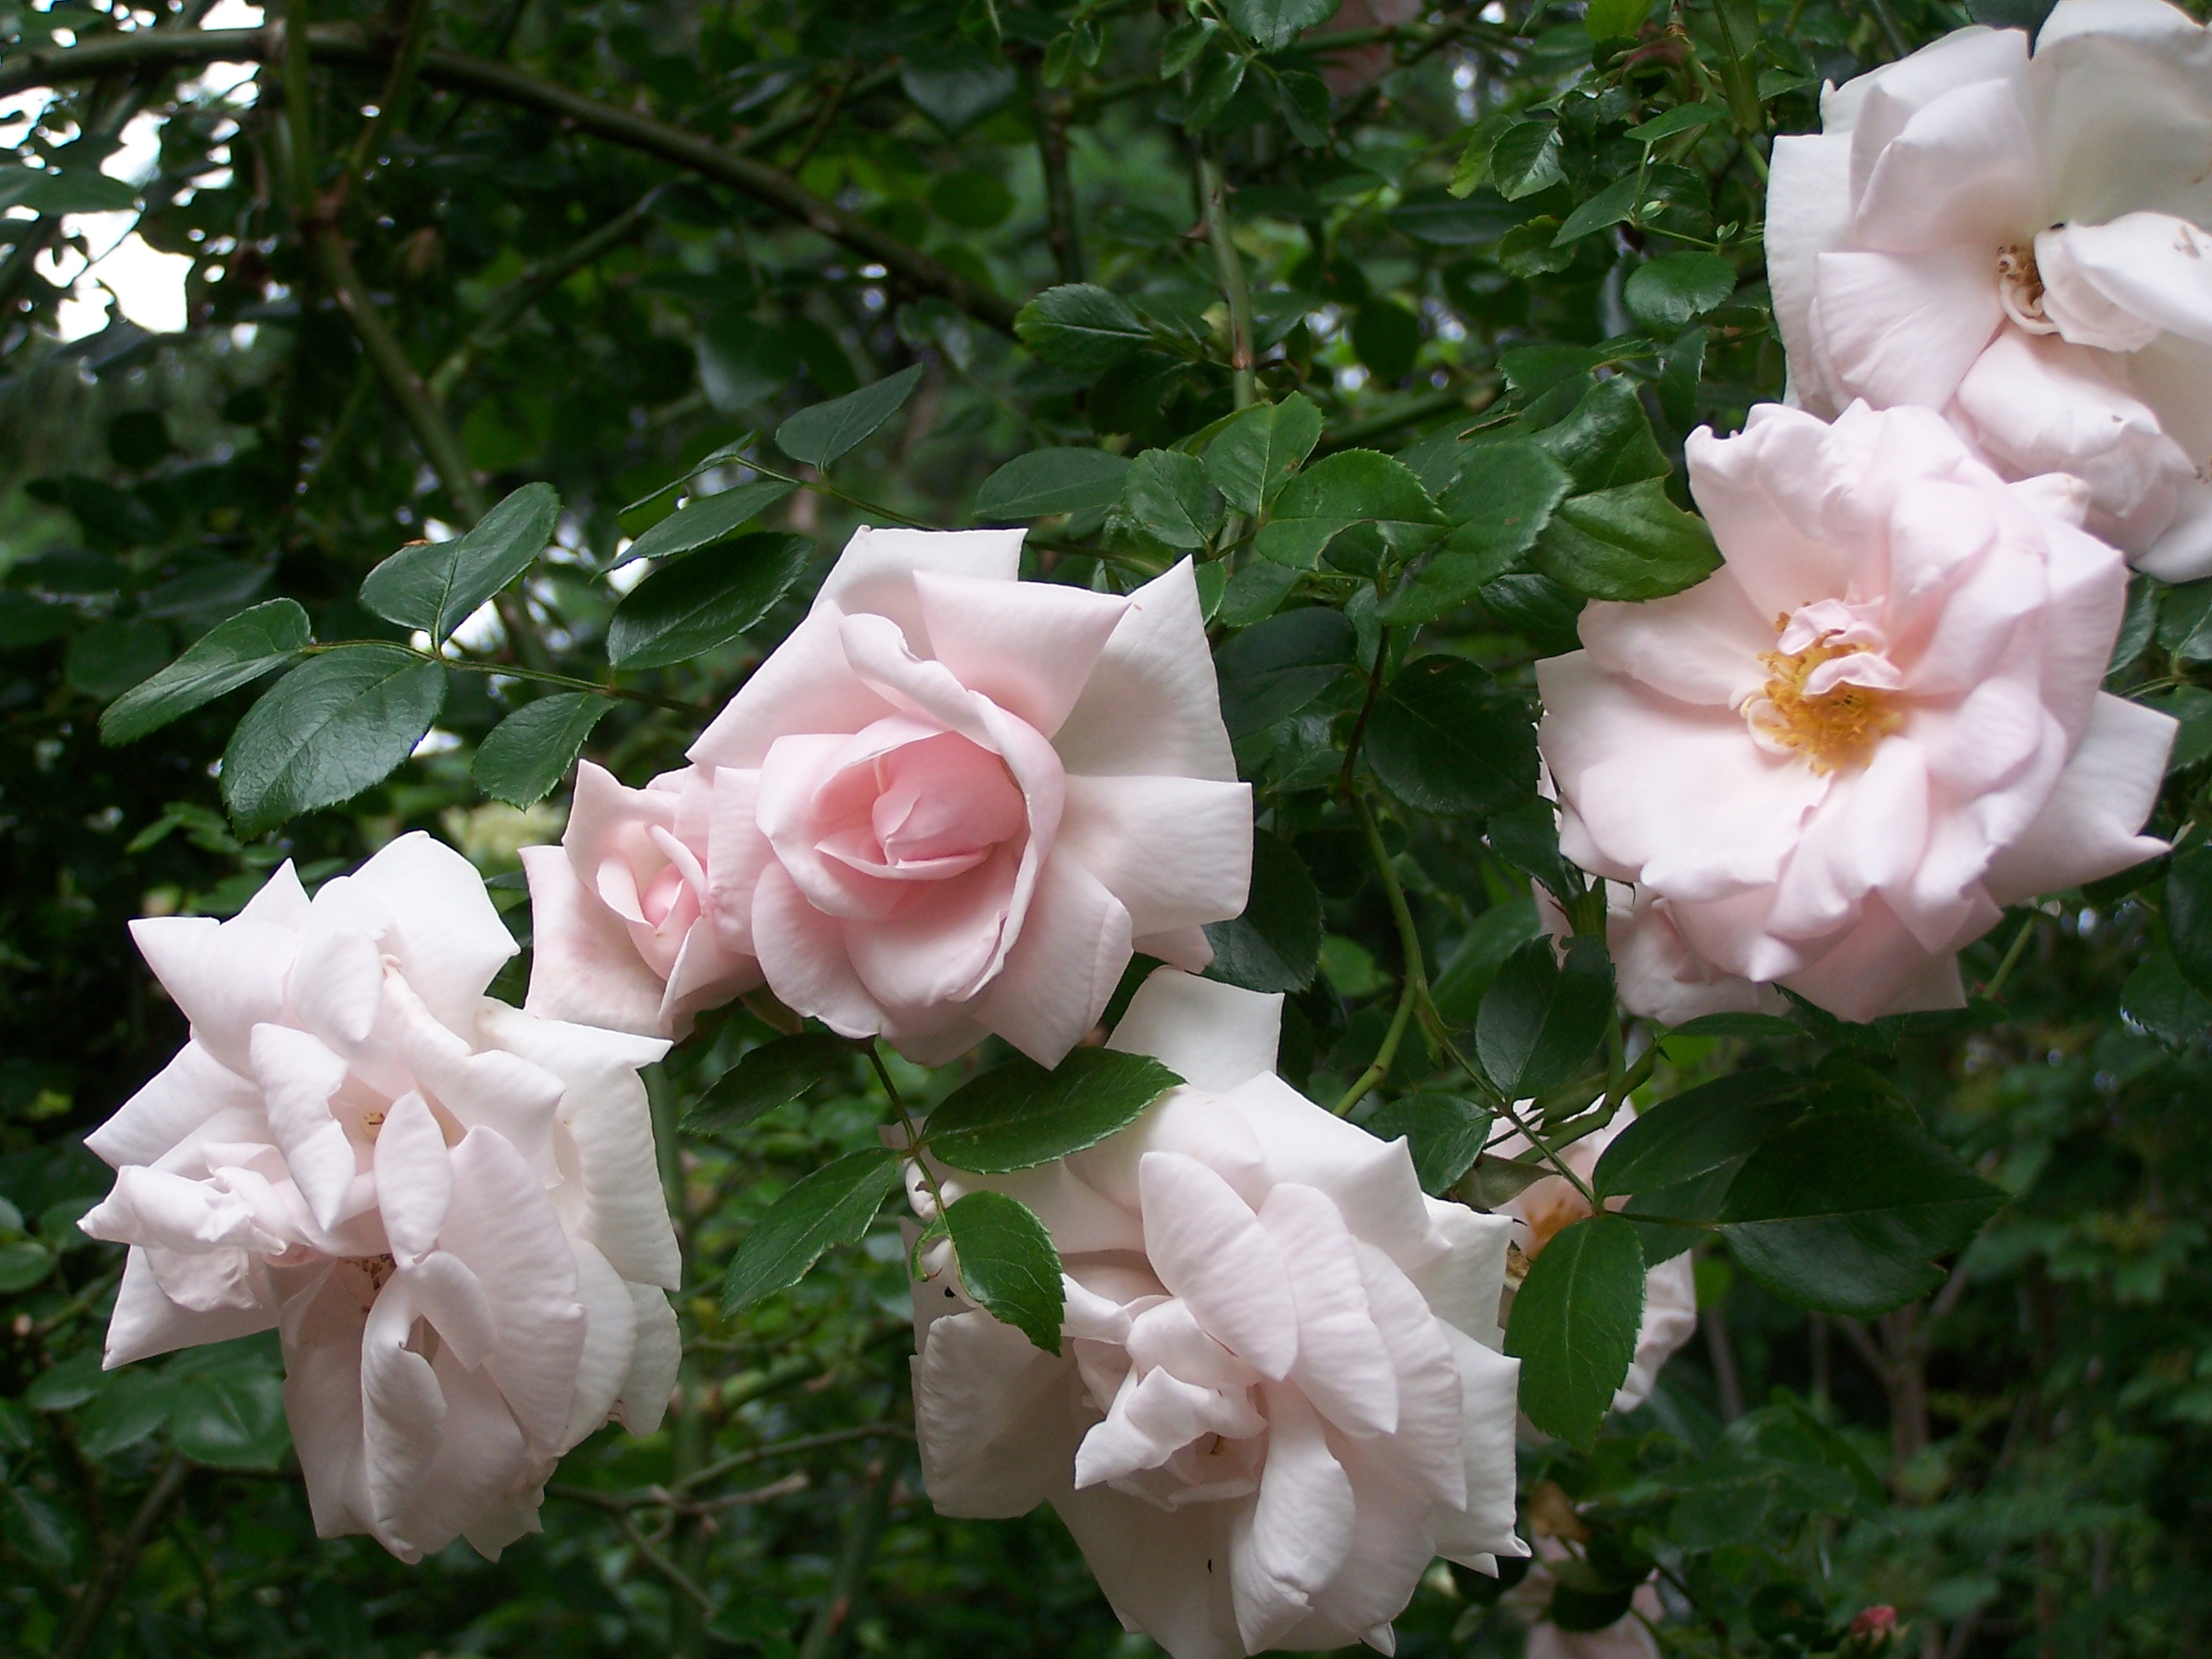 General 2576x1932 flowers rose garden pink roses